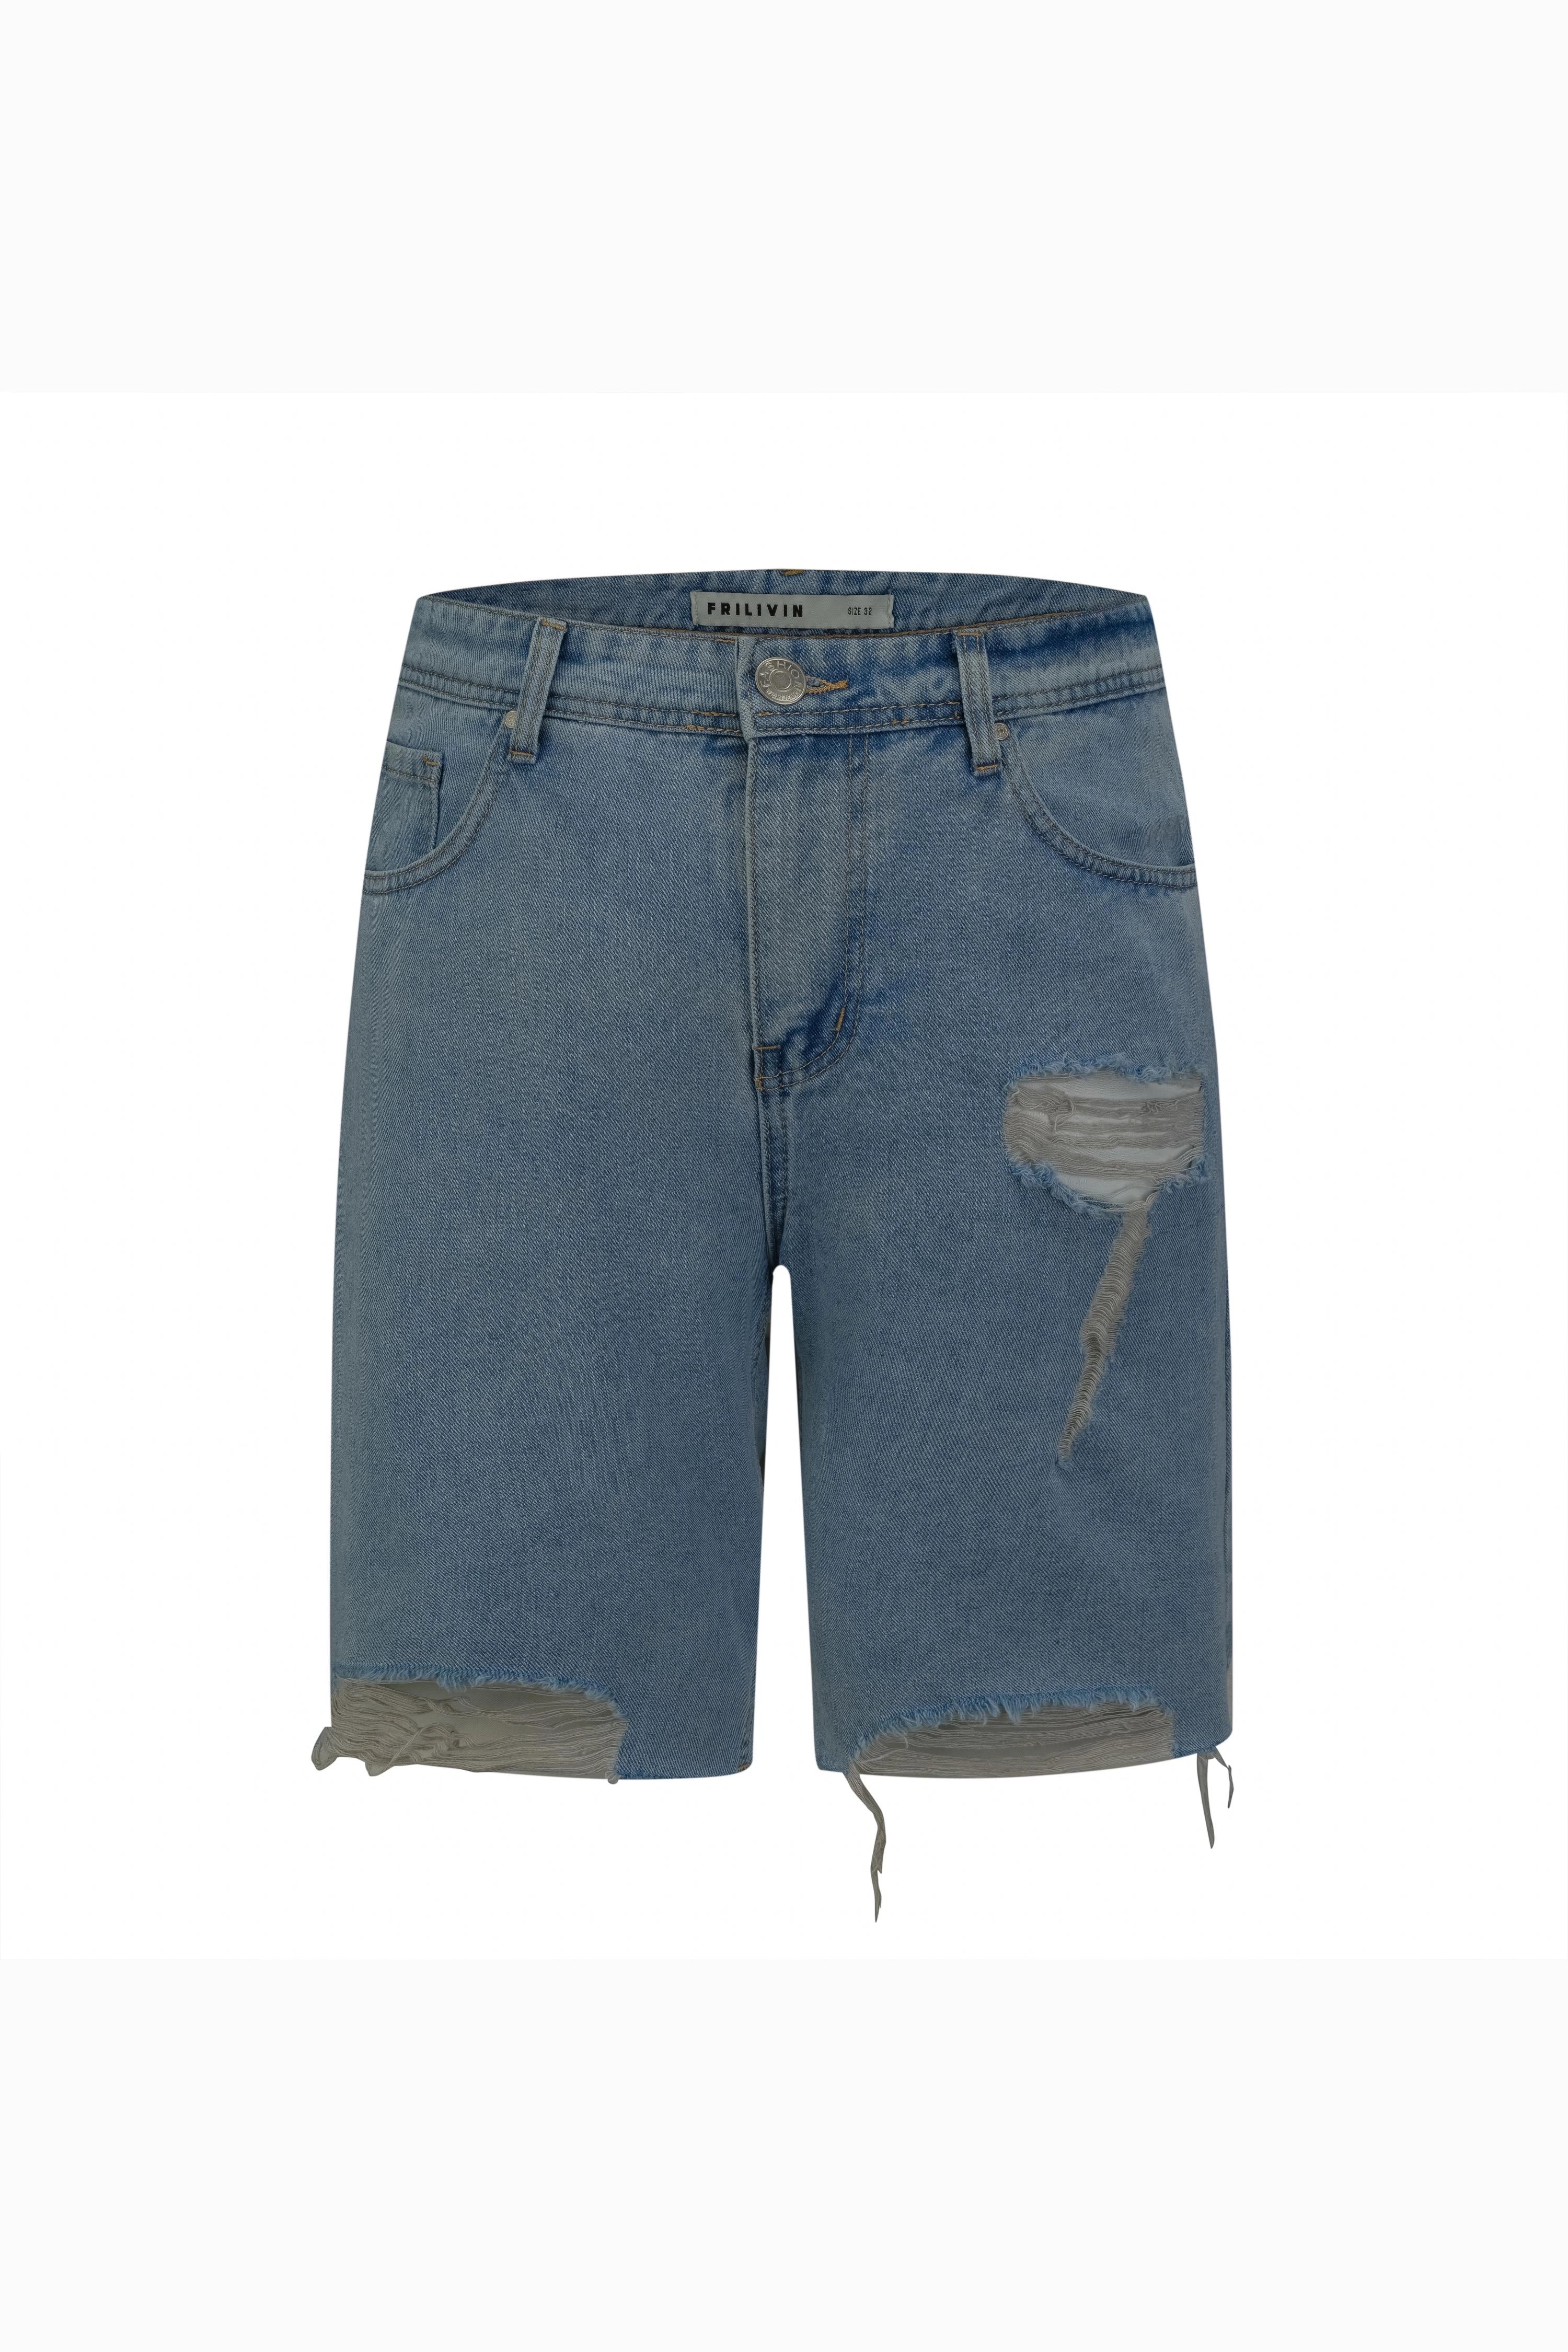 Washed denim shorts with worn details